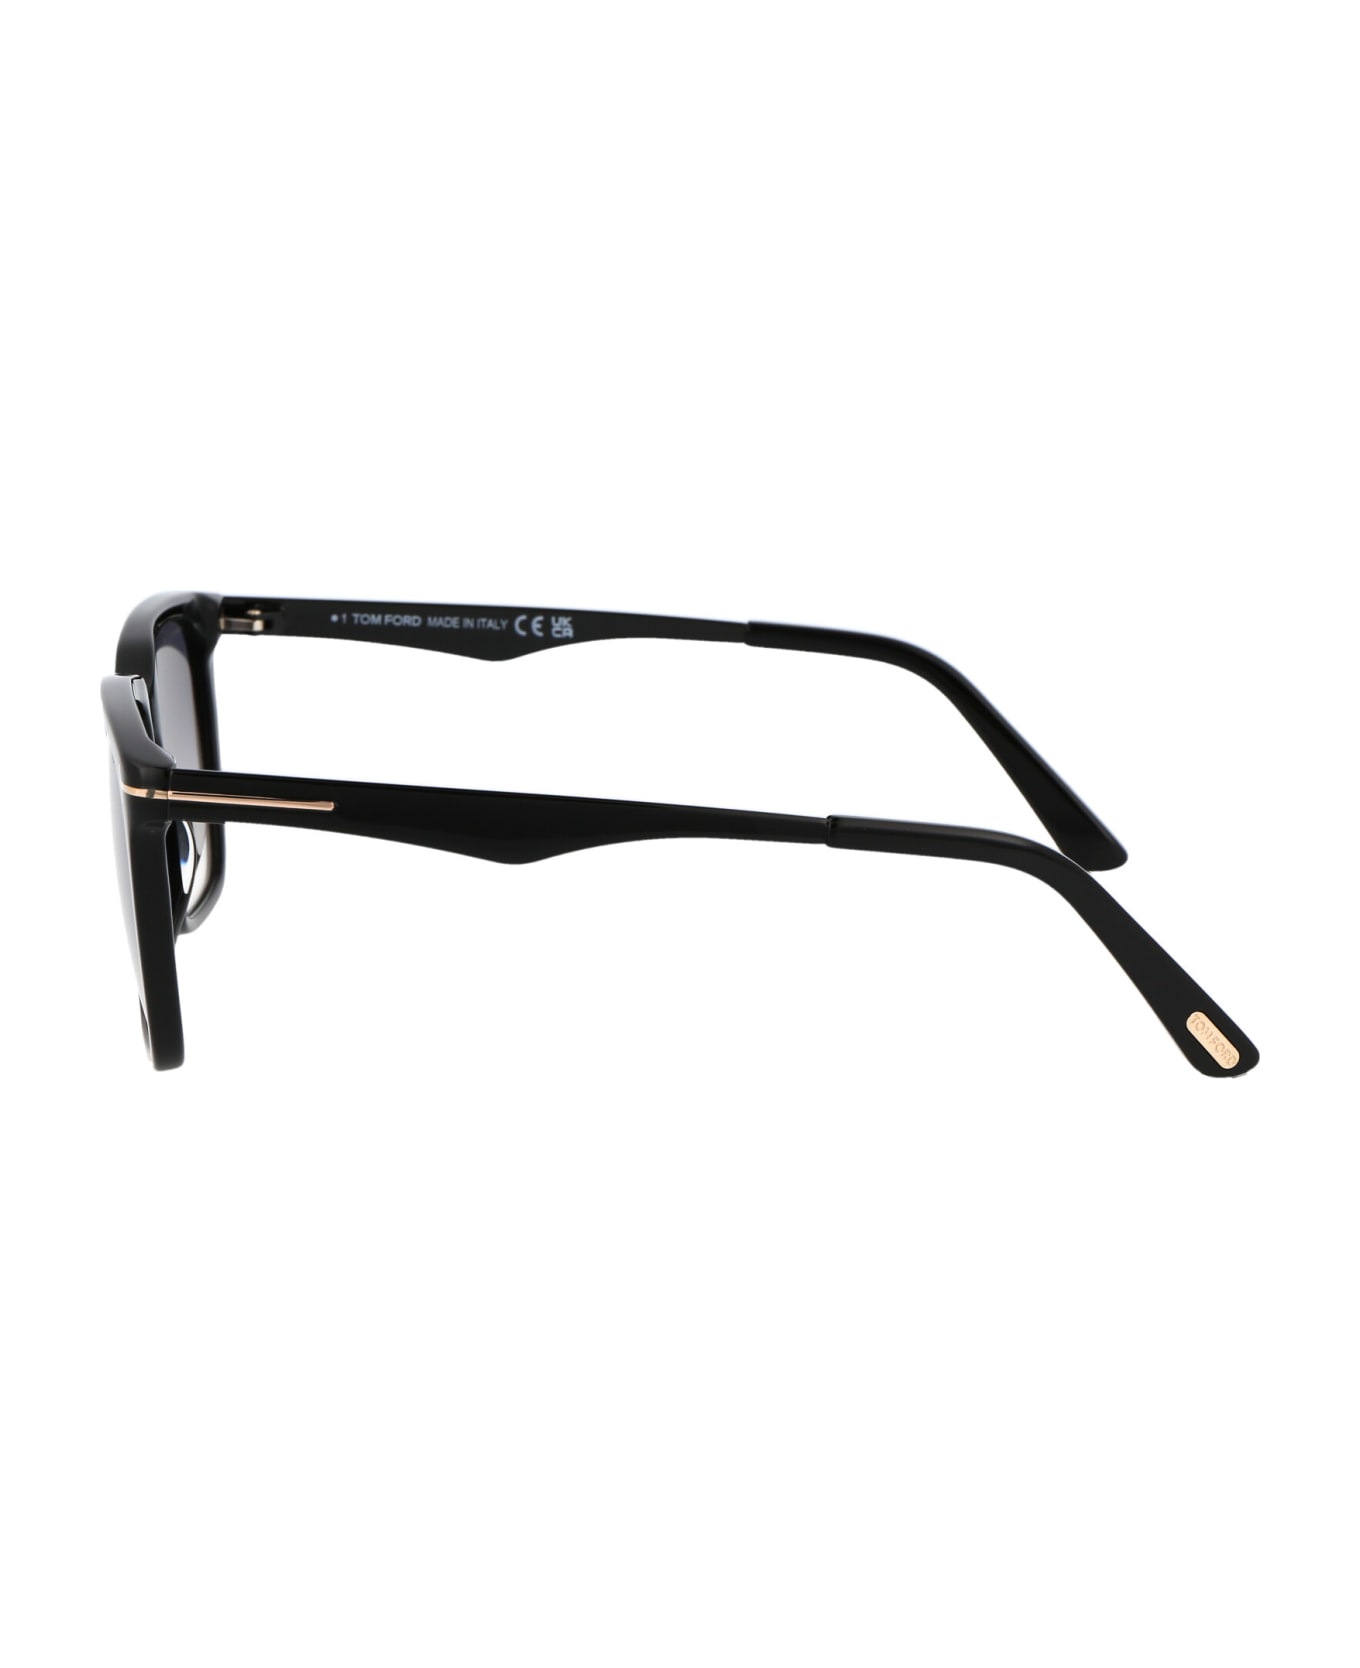 Tom Ford Eyewear Garrett Sunglasses - 01B Nero Lucido / Fumo Grad サングラス